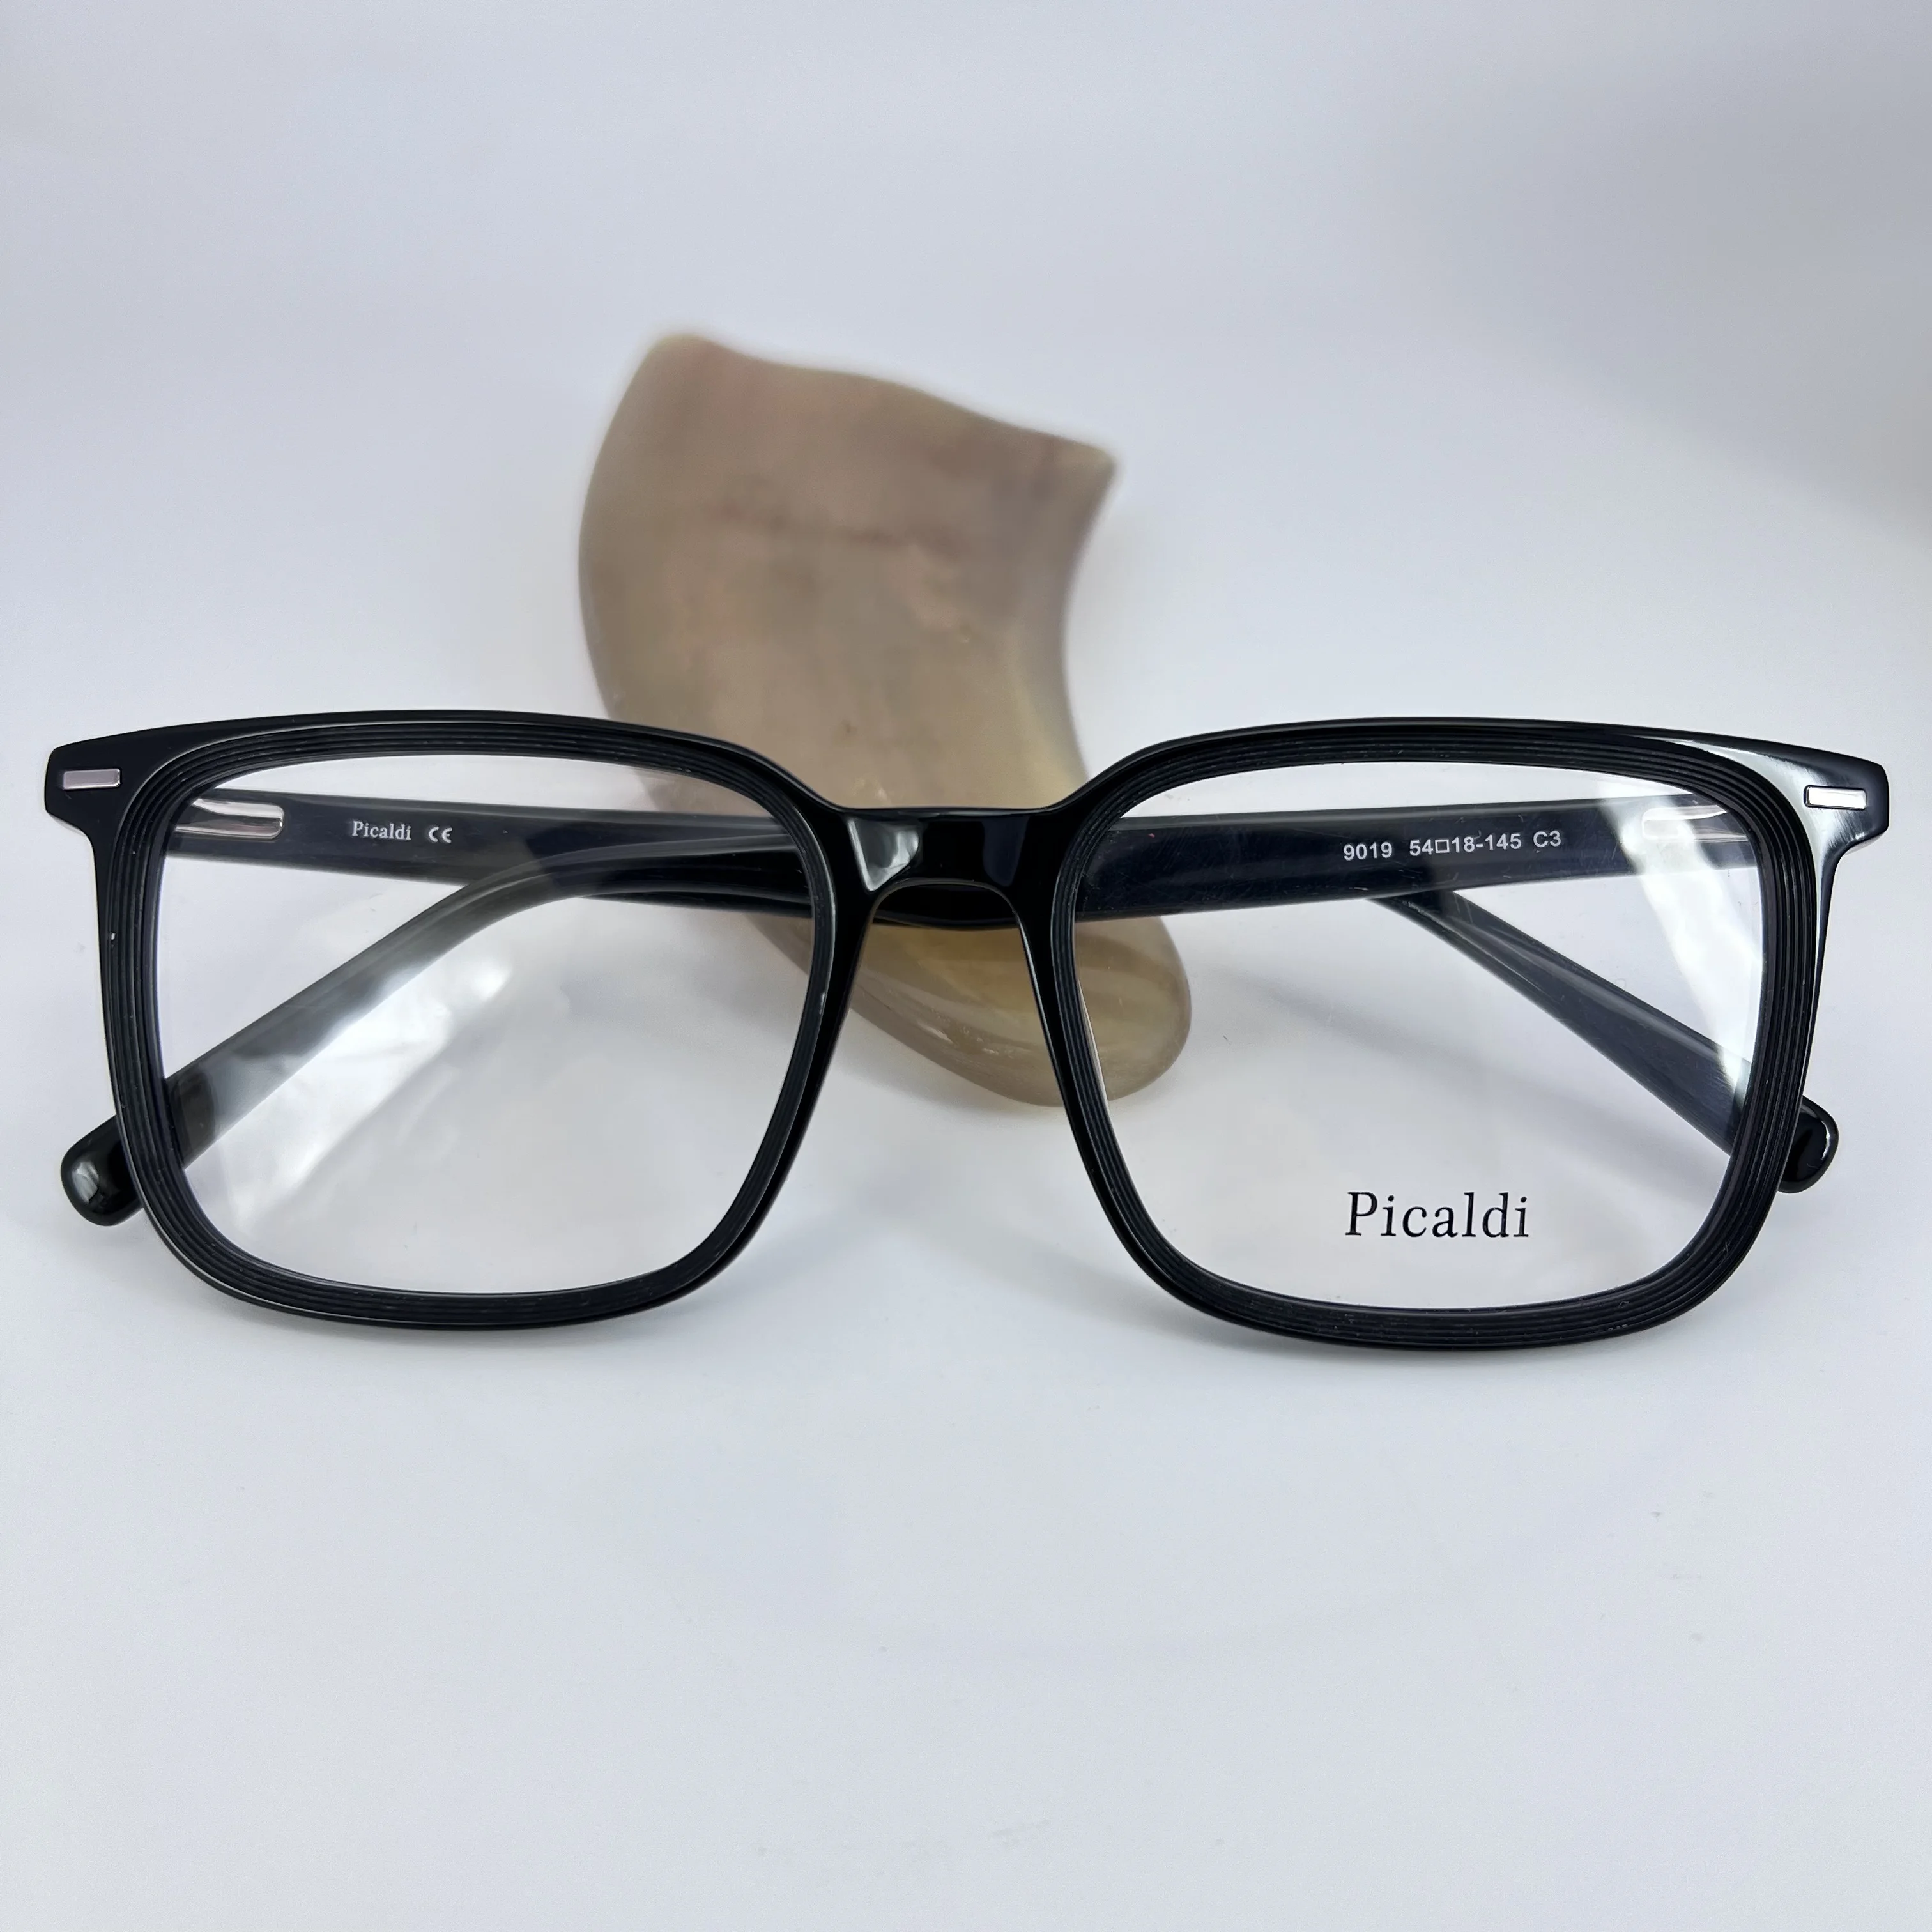 

Premium Acetate Fiber Material Eyeglass Frames - Unisex Styles with Multiple Options